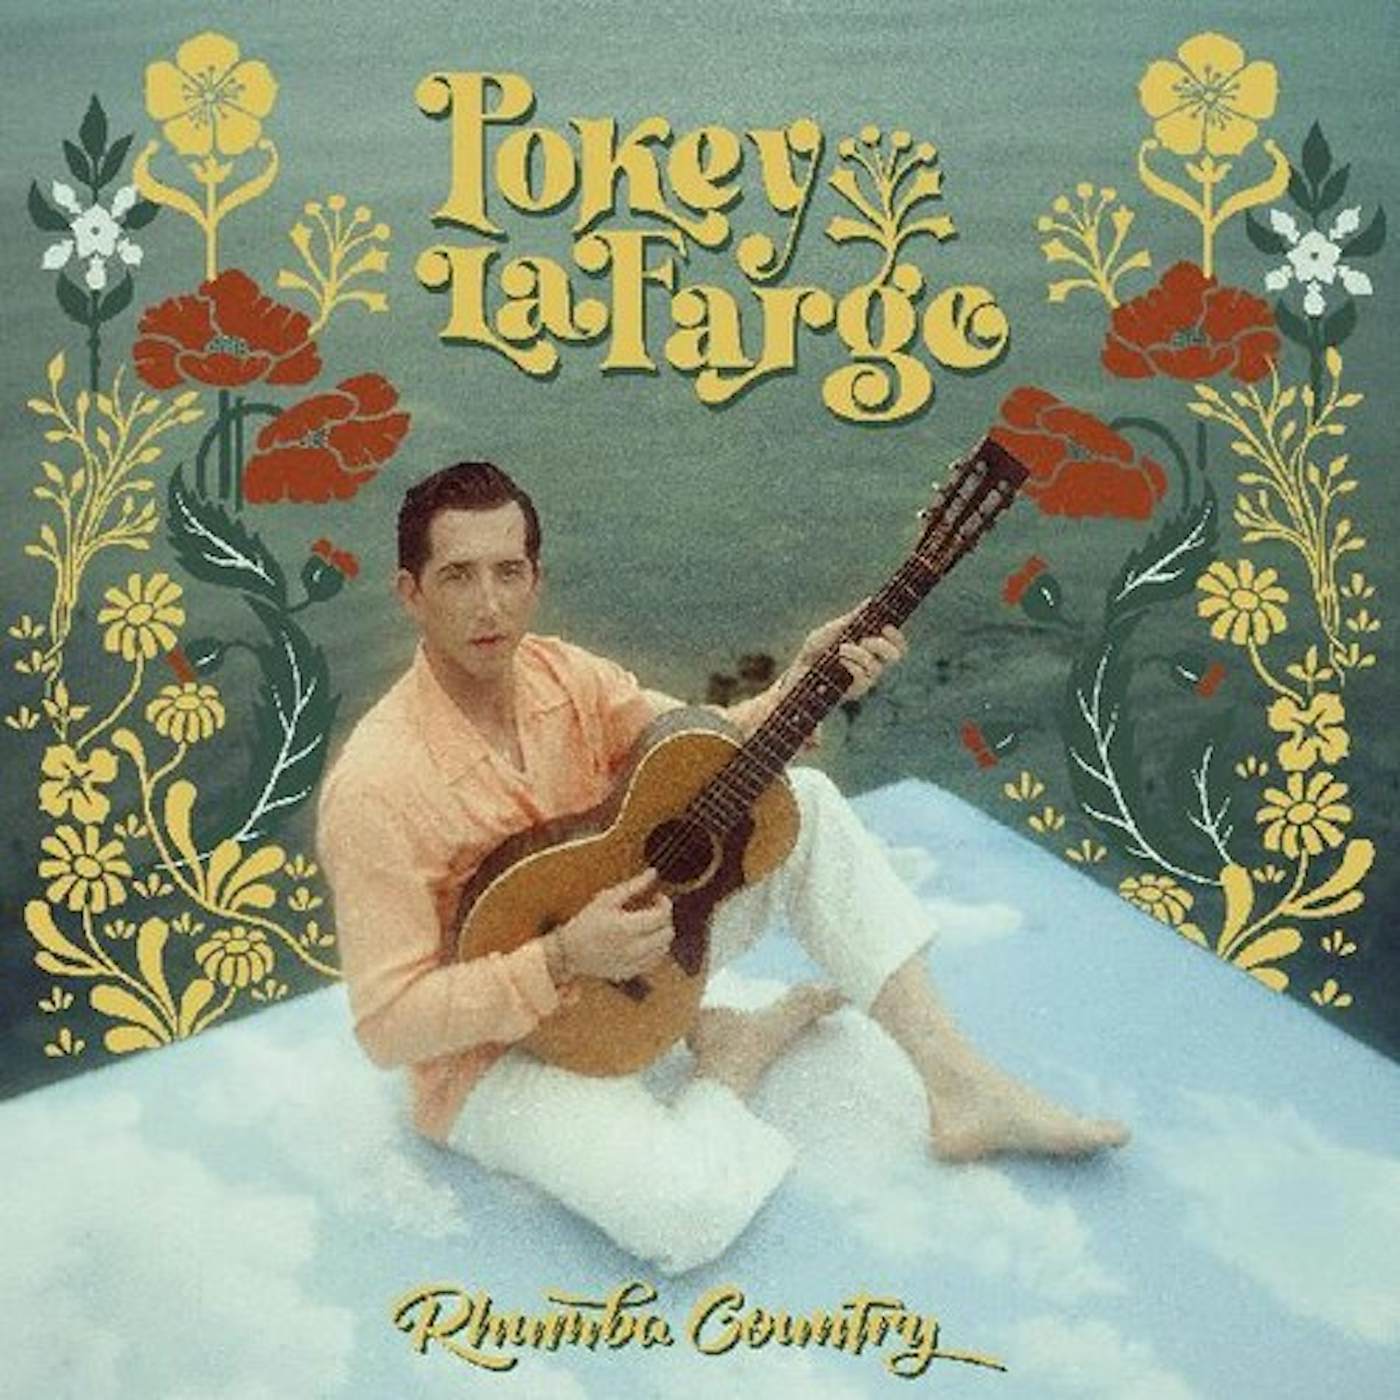 Pokey LaFarge RHUMBA COUNTRY Vinyl Record